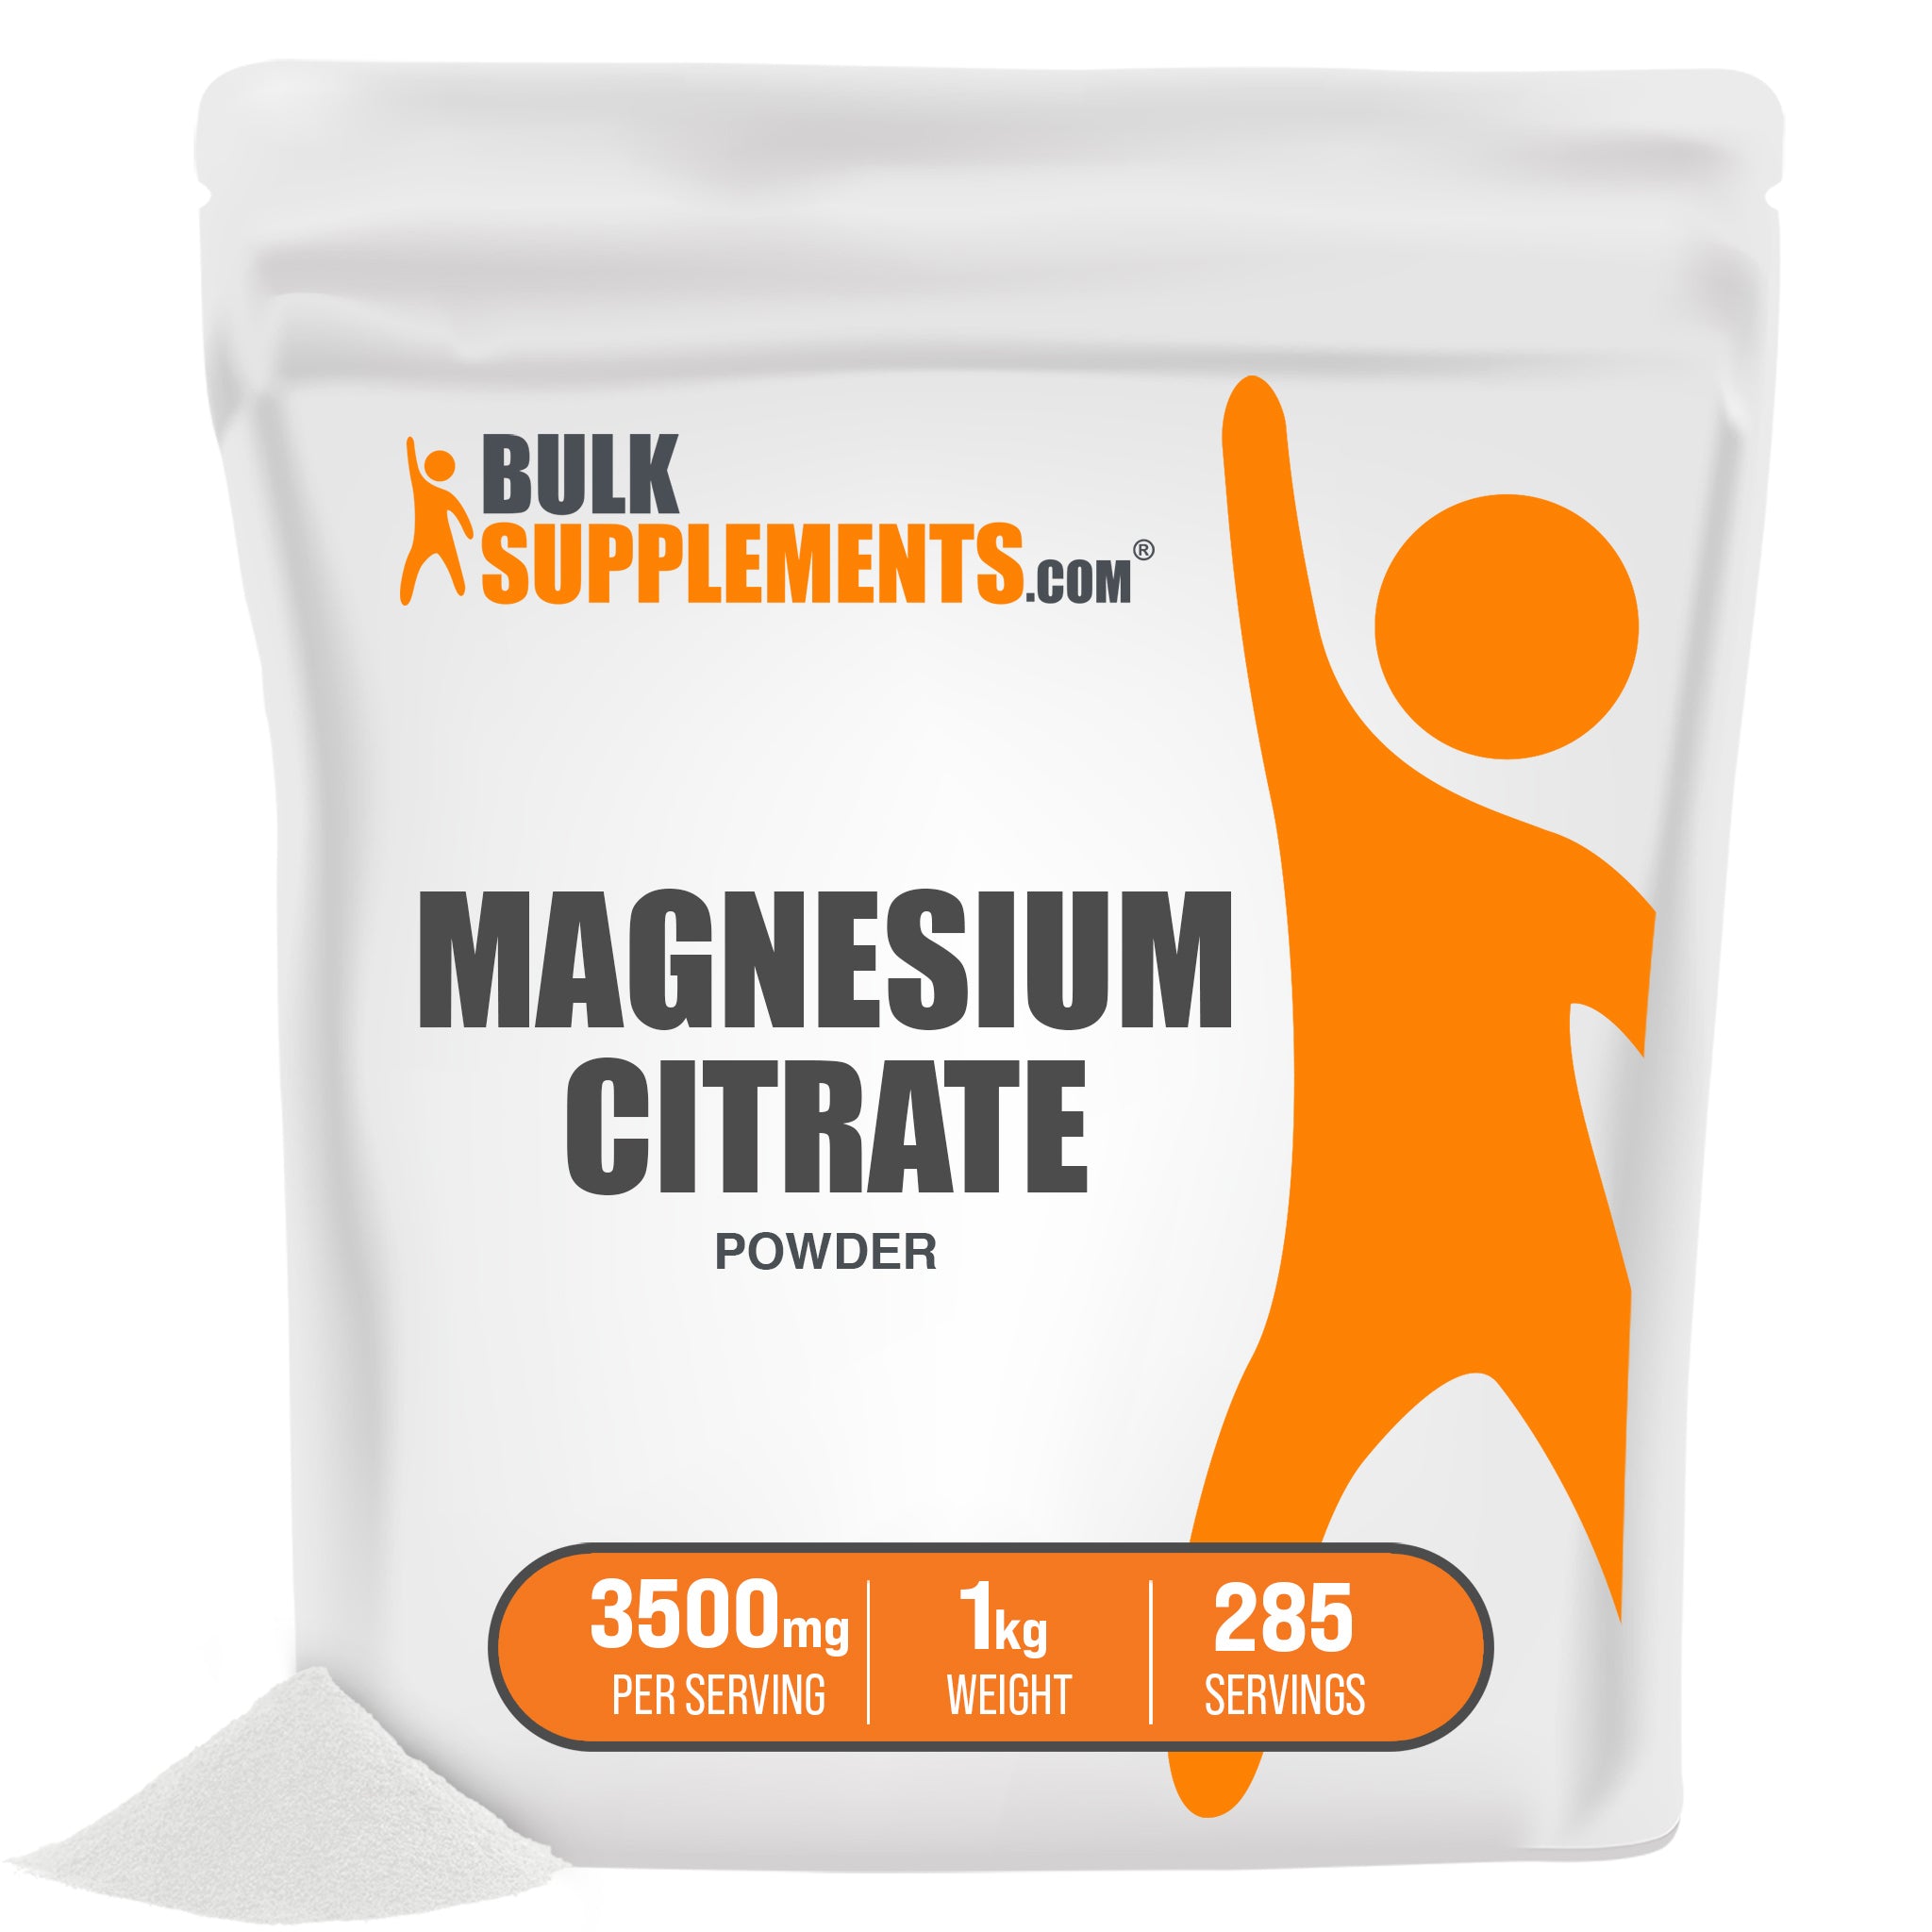 BulkSupplements Magnesium Citrate Powder 1kg bag